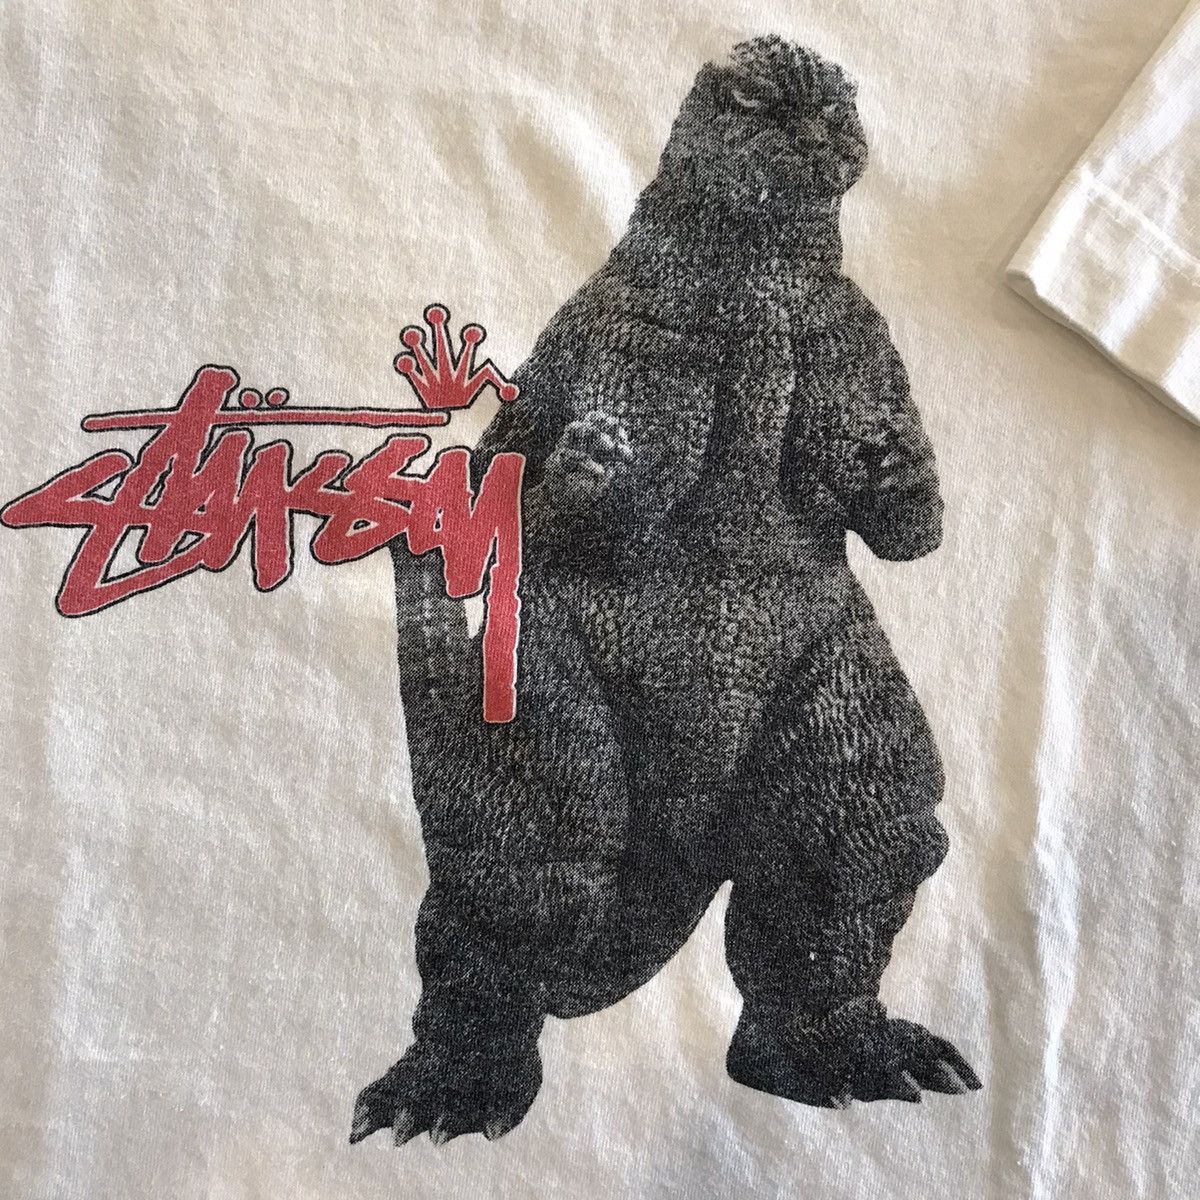 Vintage Stussy Godzilla photo print T shirt Size L/XL - 3